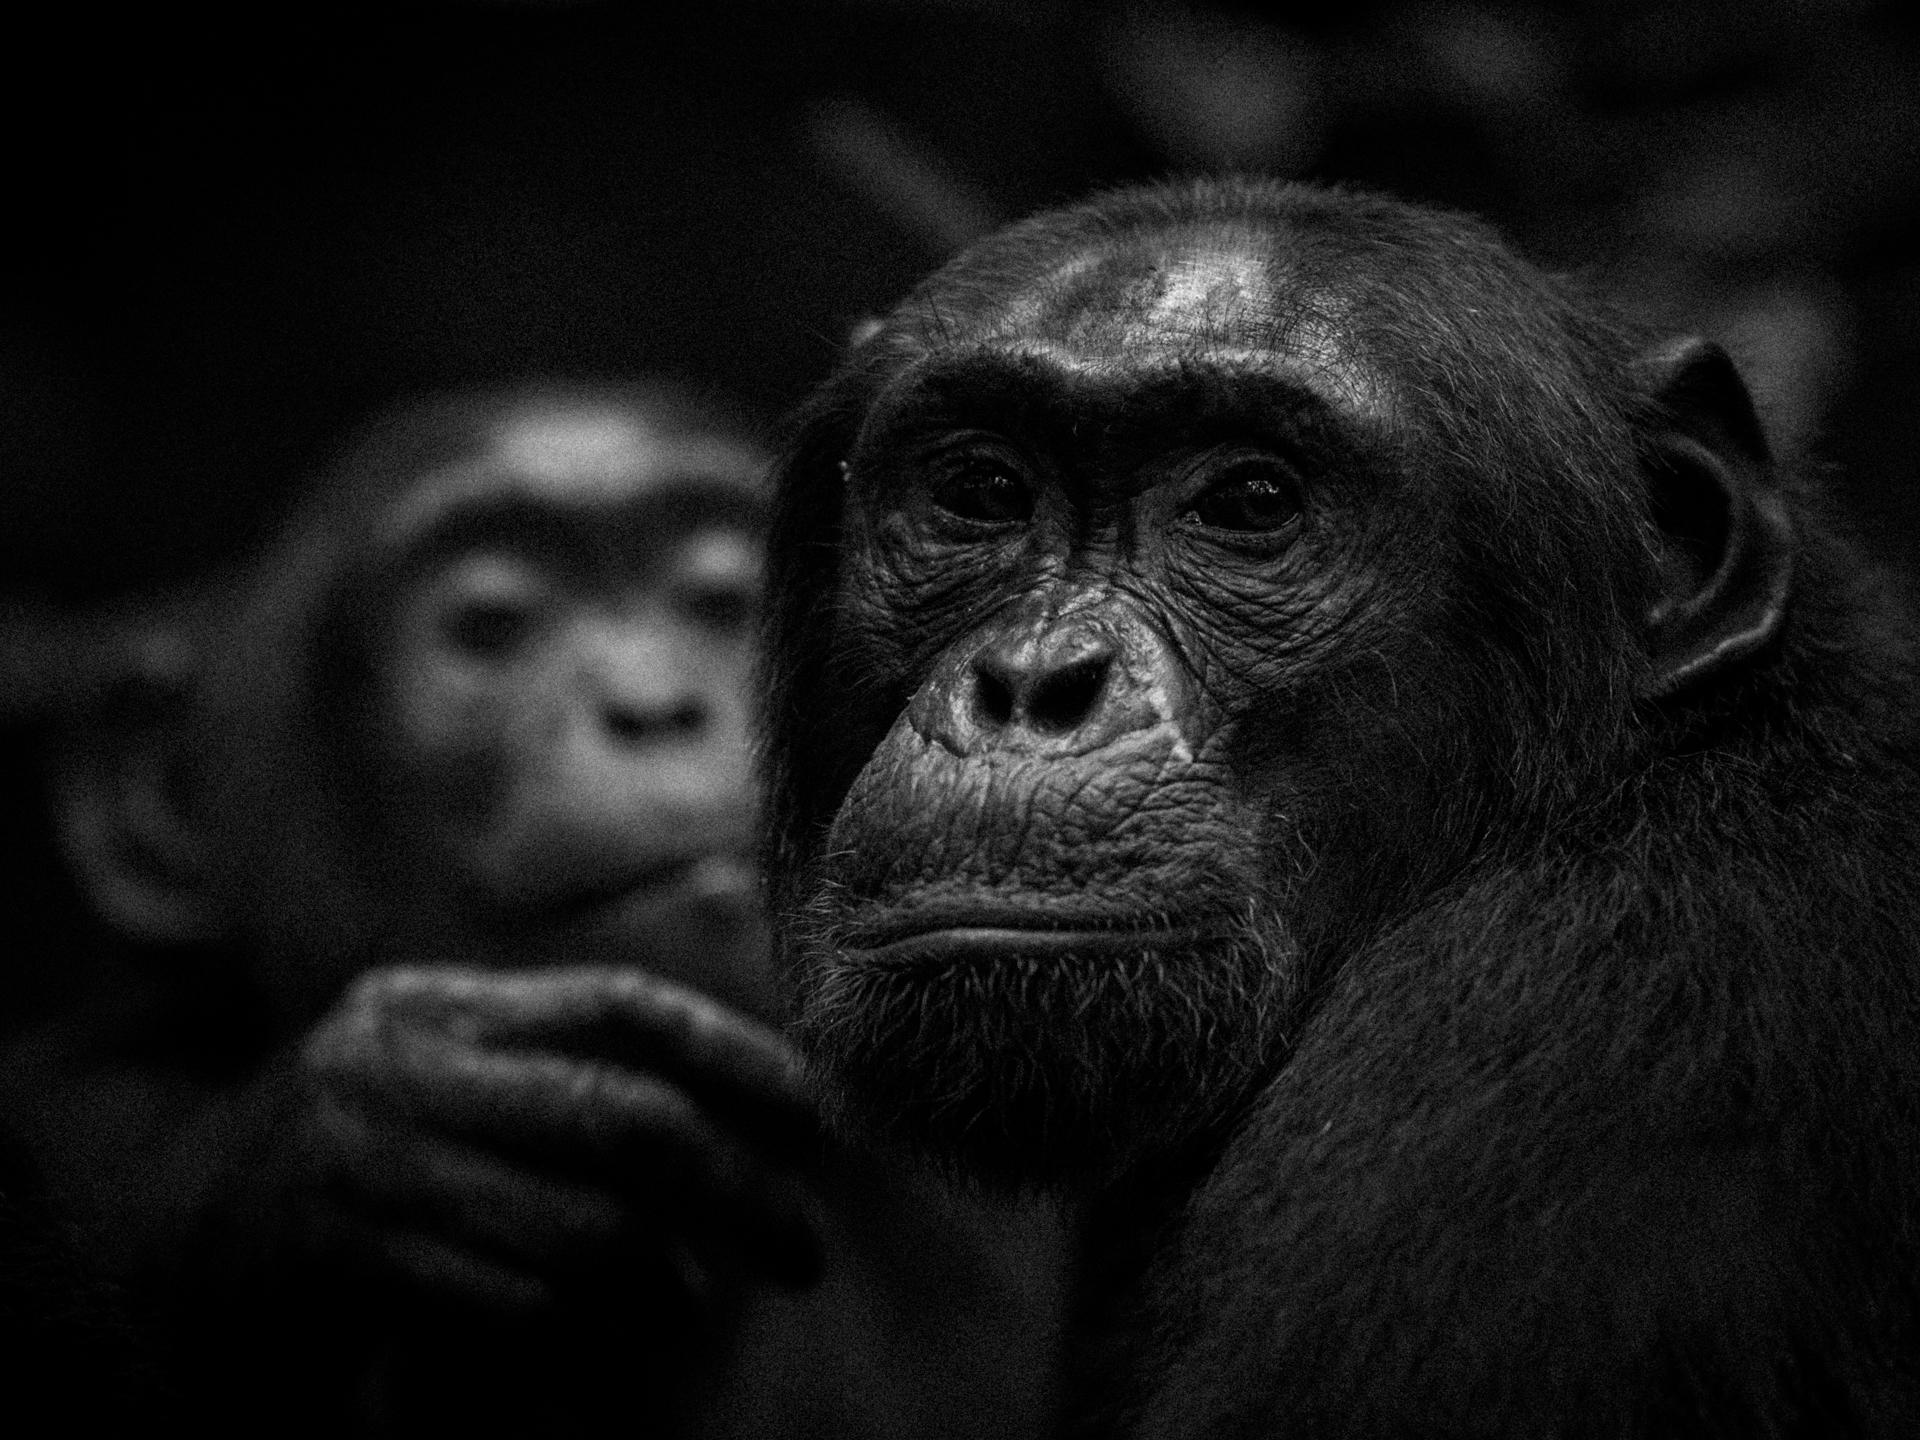 New York Photography Awards Winner - Chimp grooming